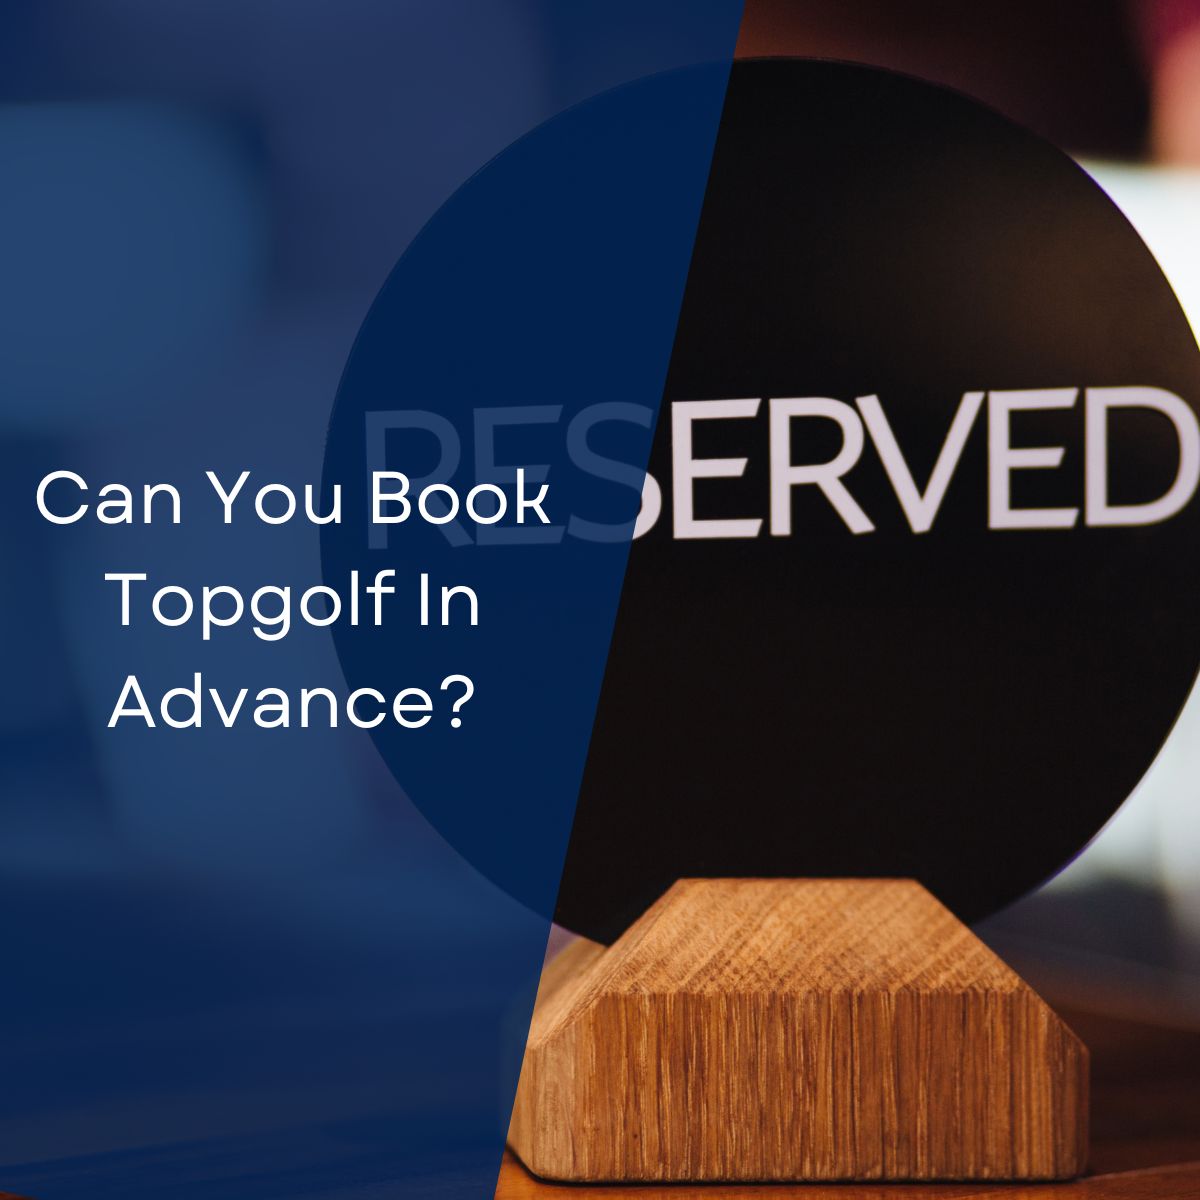 Can You Book Topgolf In Advance?